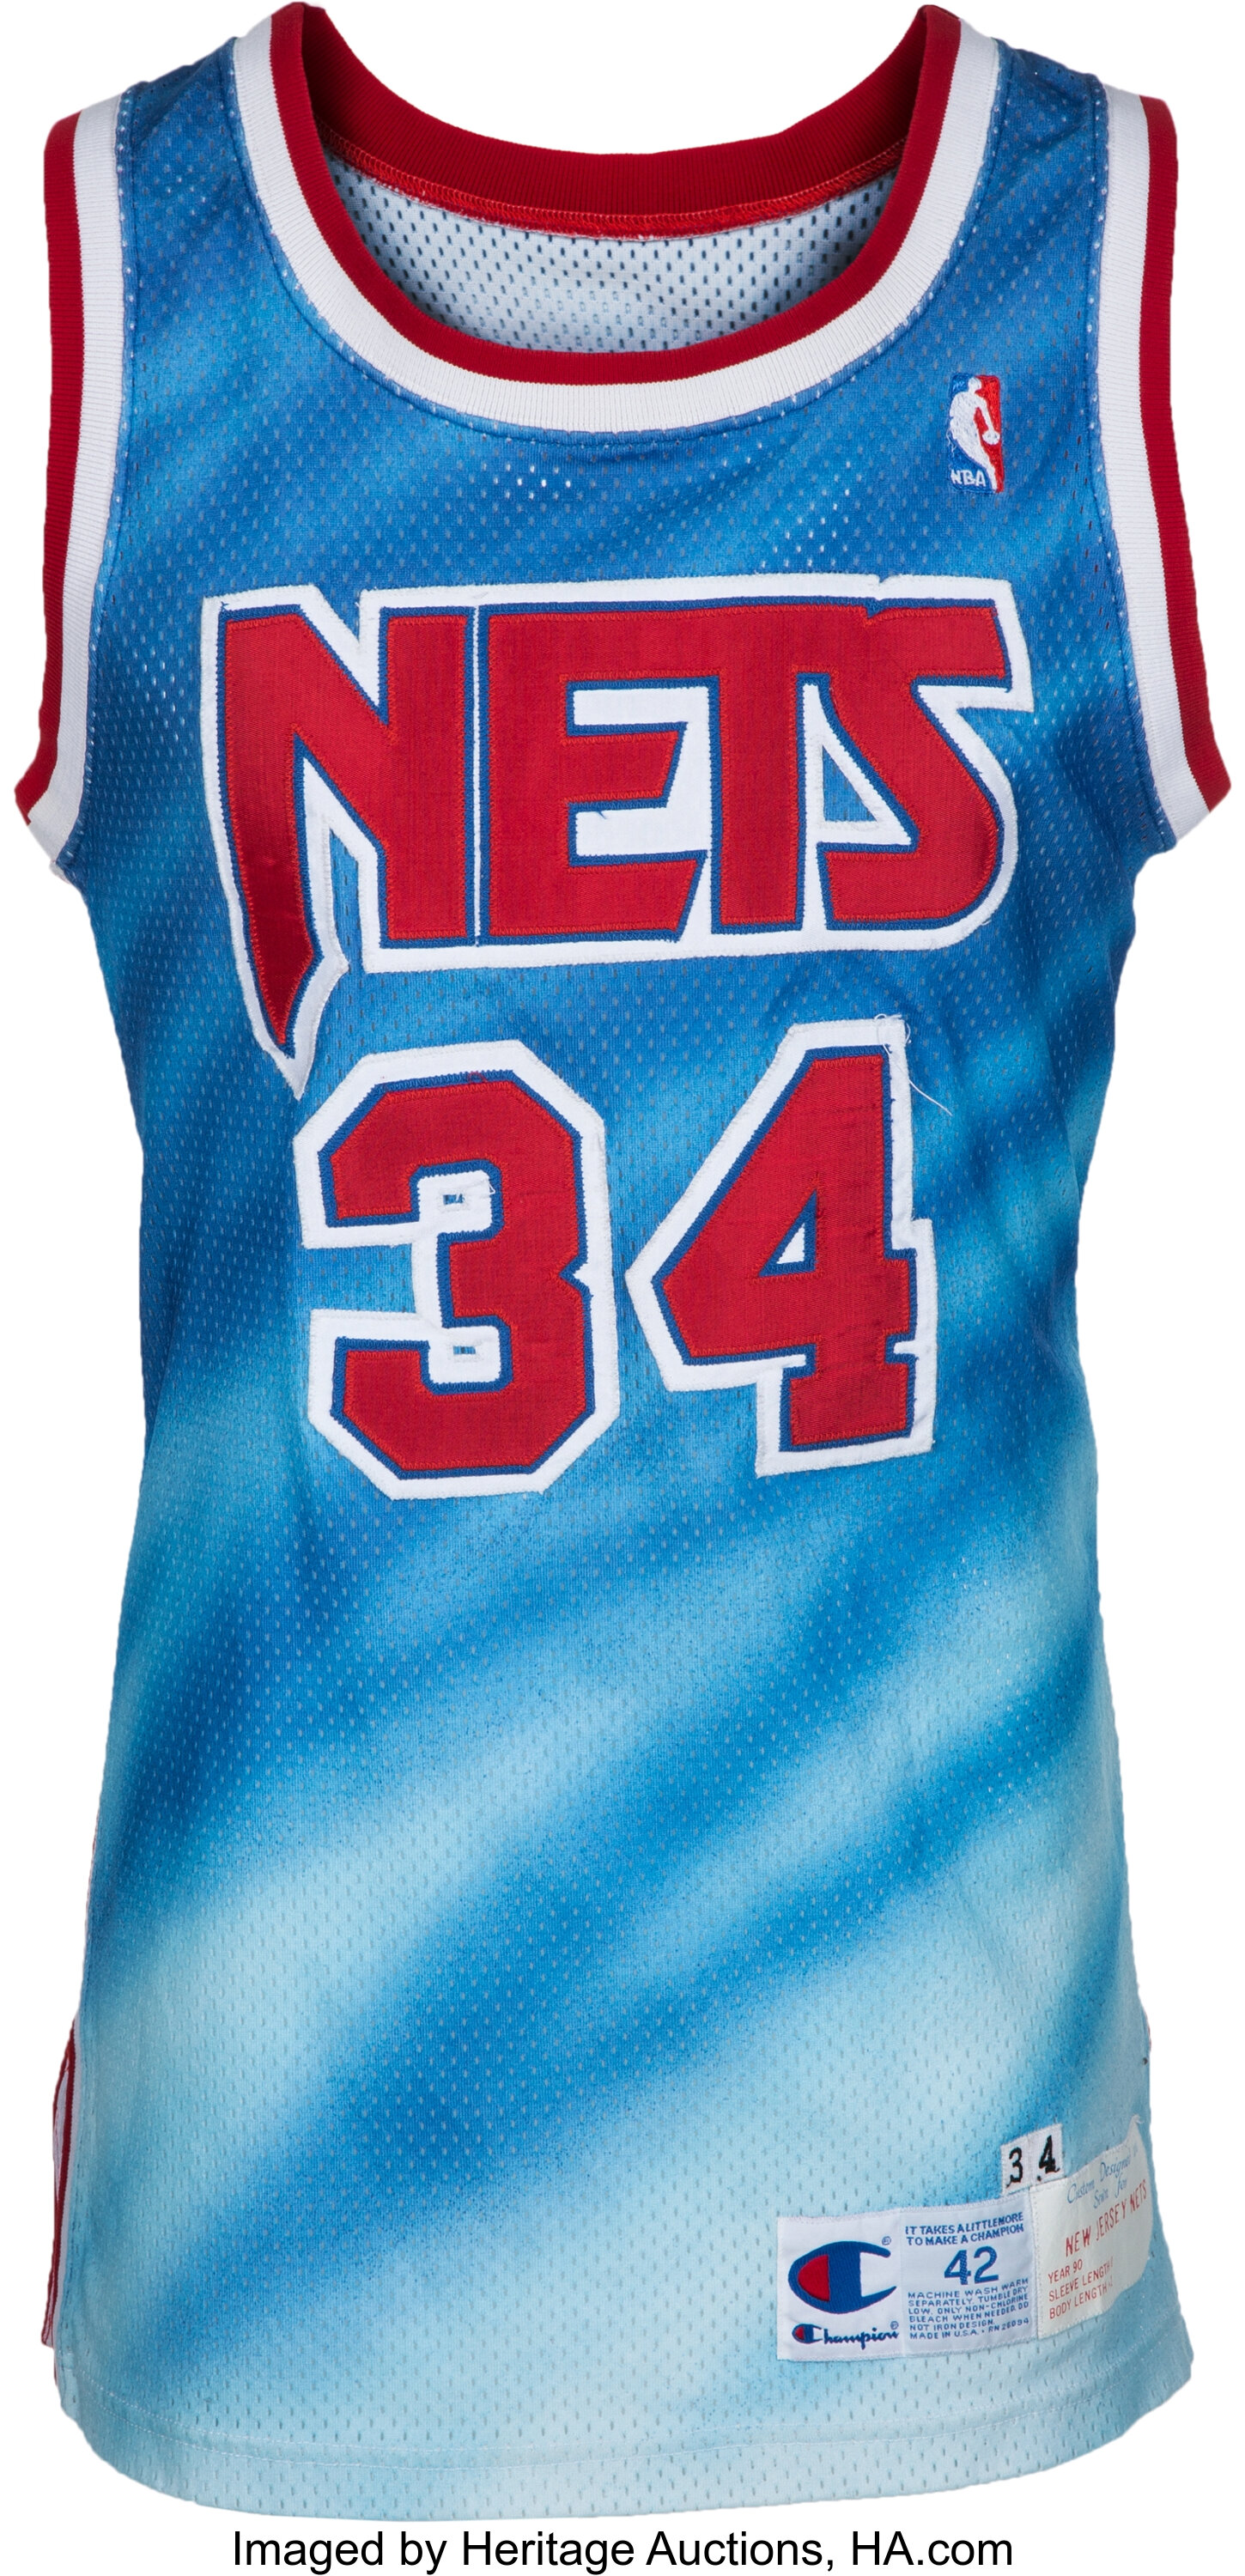 Nets unveil throwback tie-dye uniforms - NBC Sports